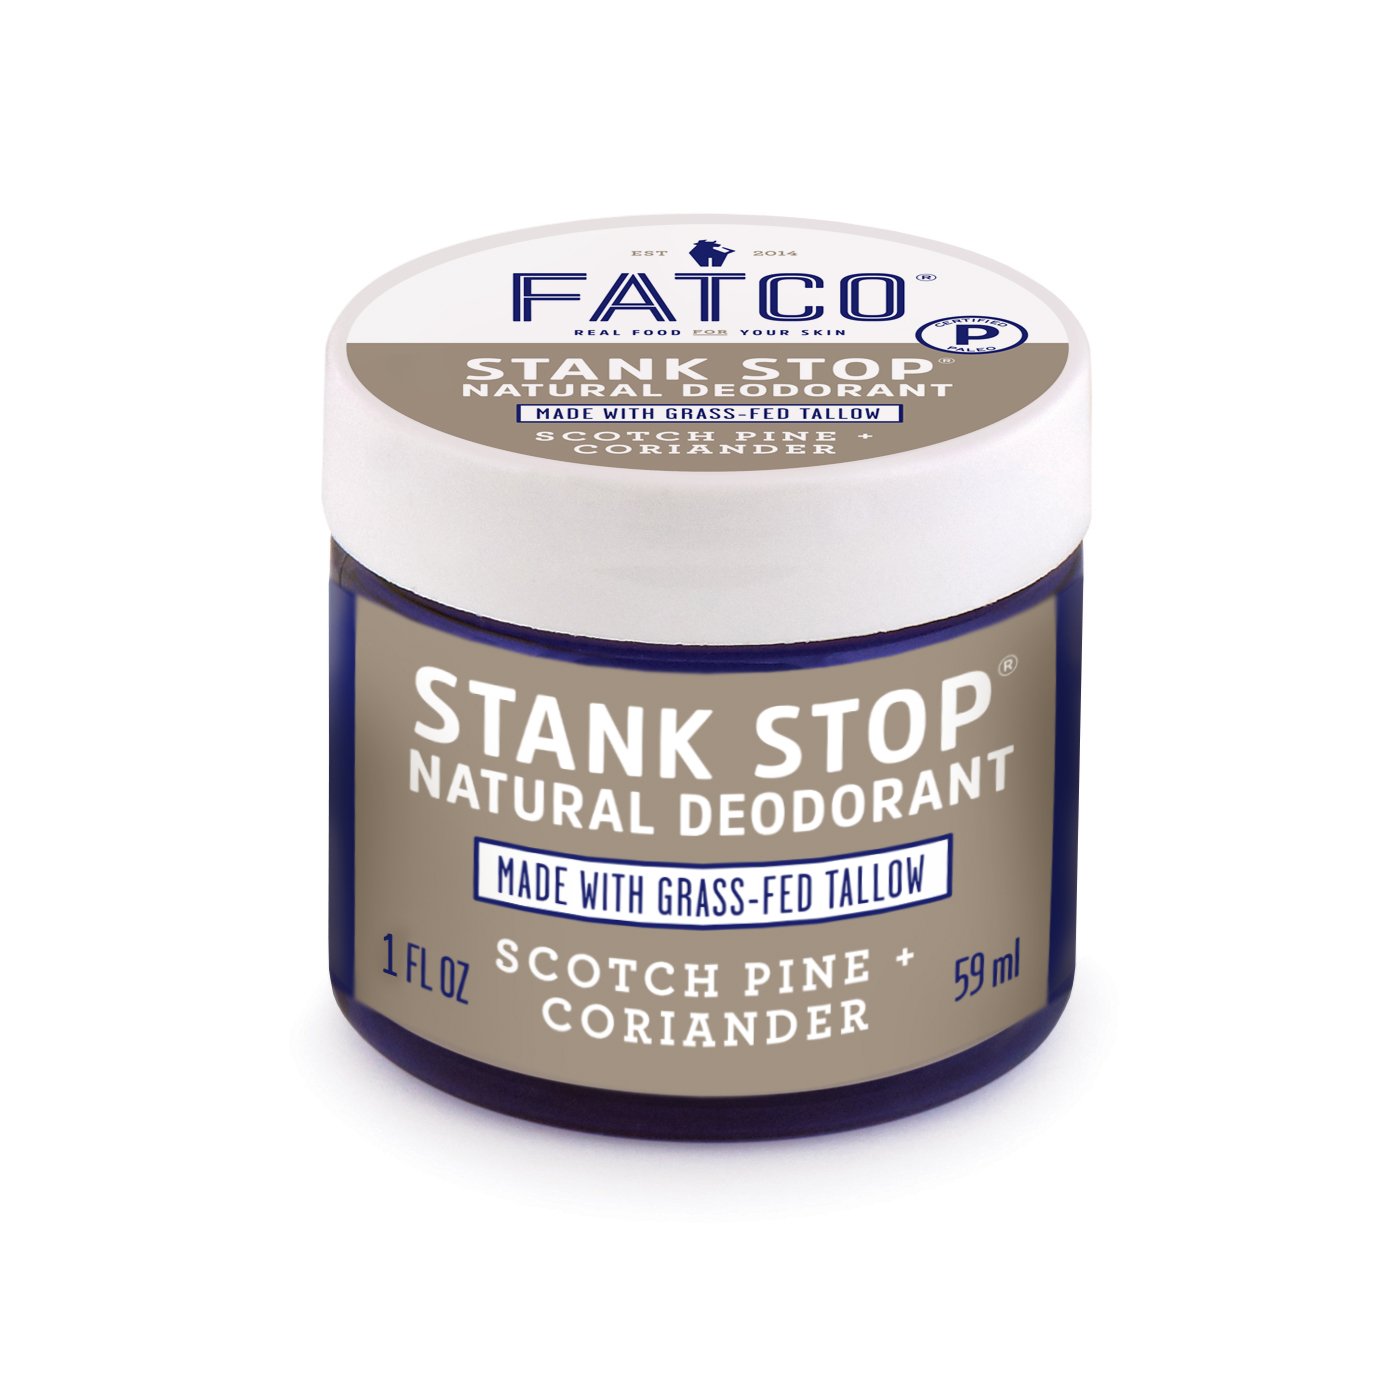 Stank Stop Cream Deodorant, Scotch Pine + Coriander 1oz